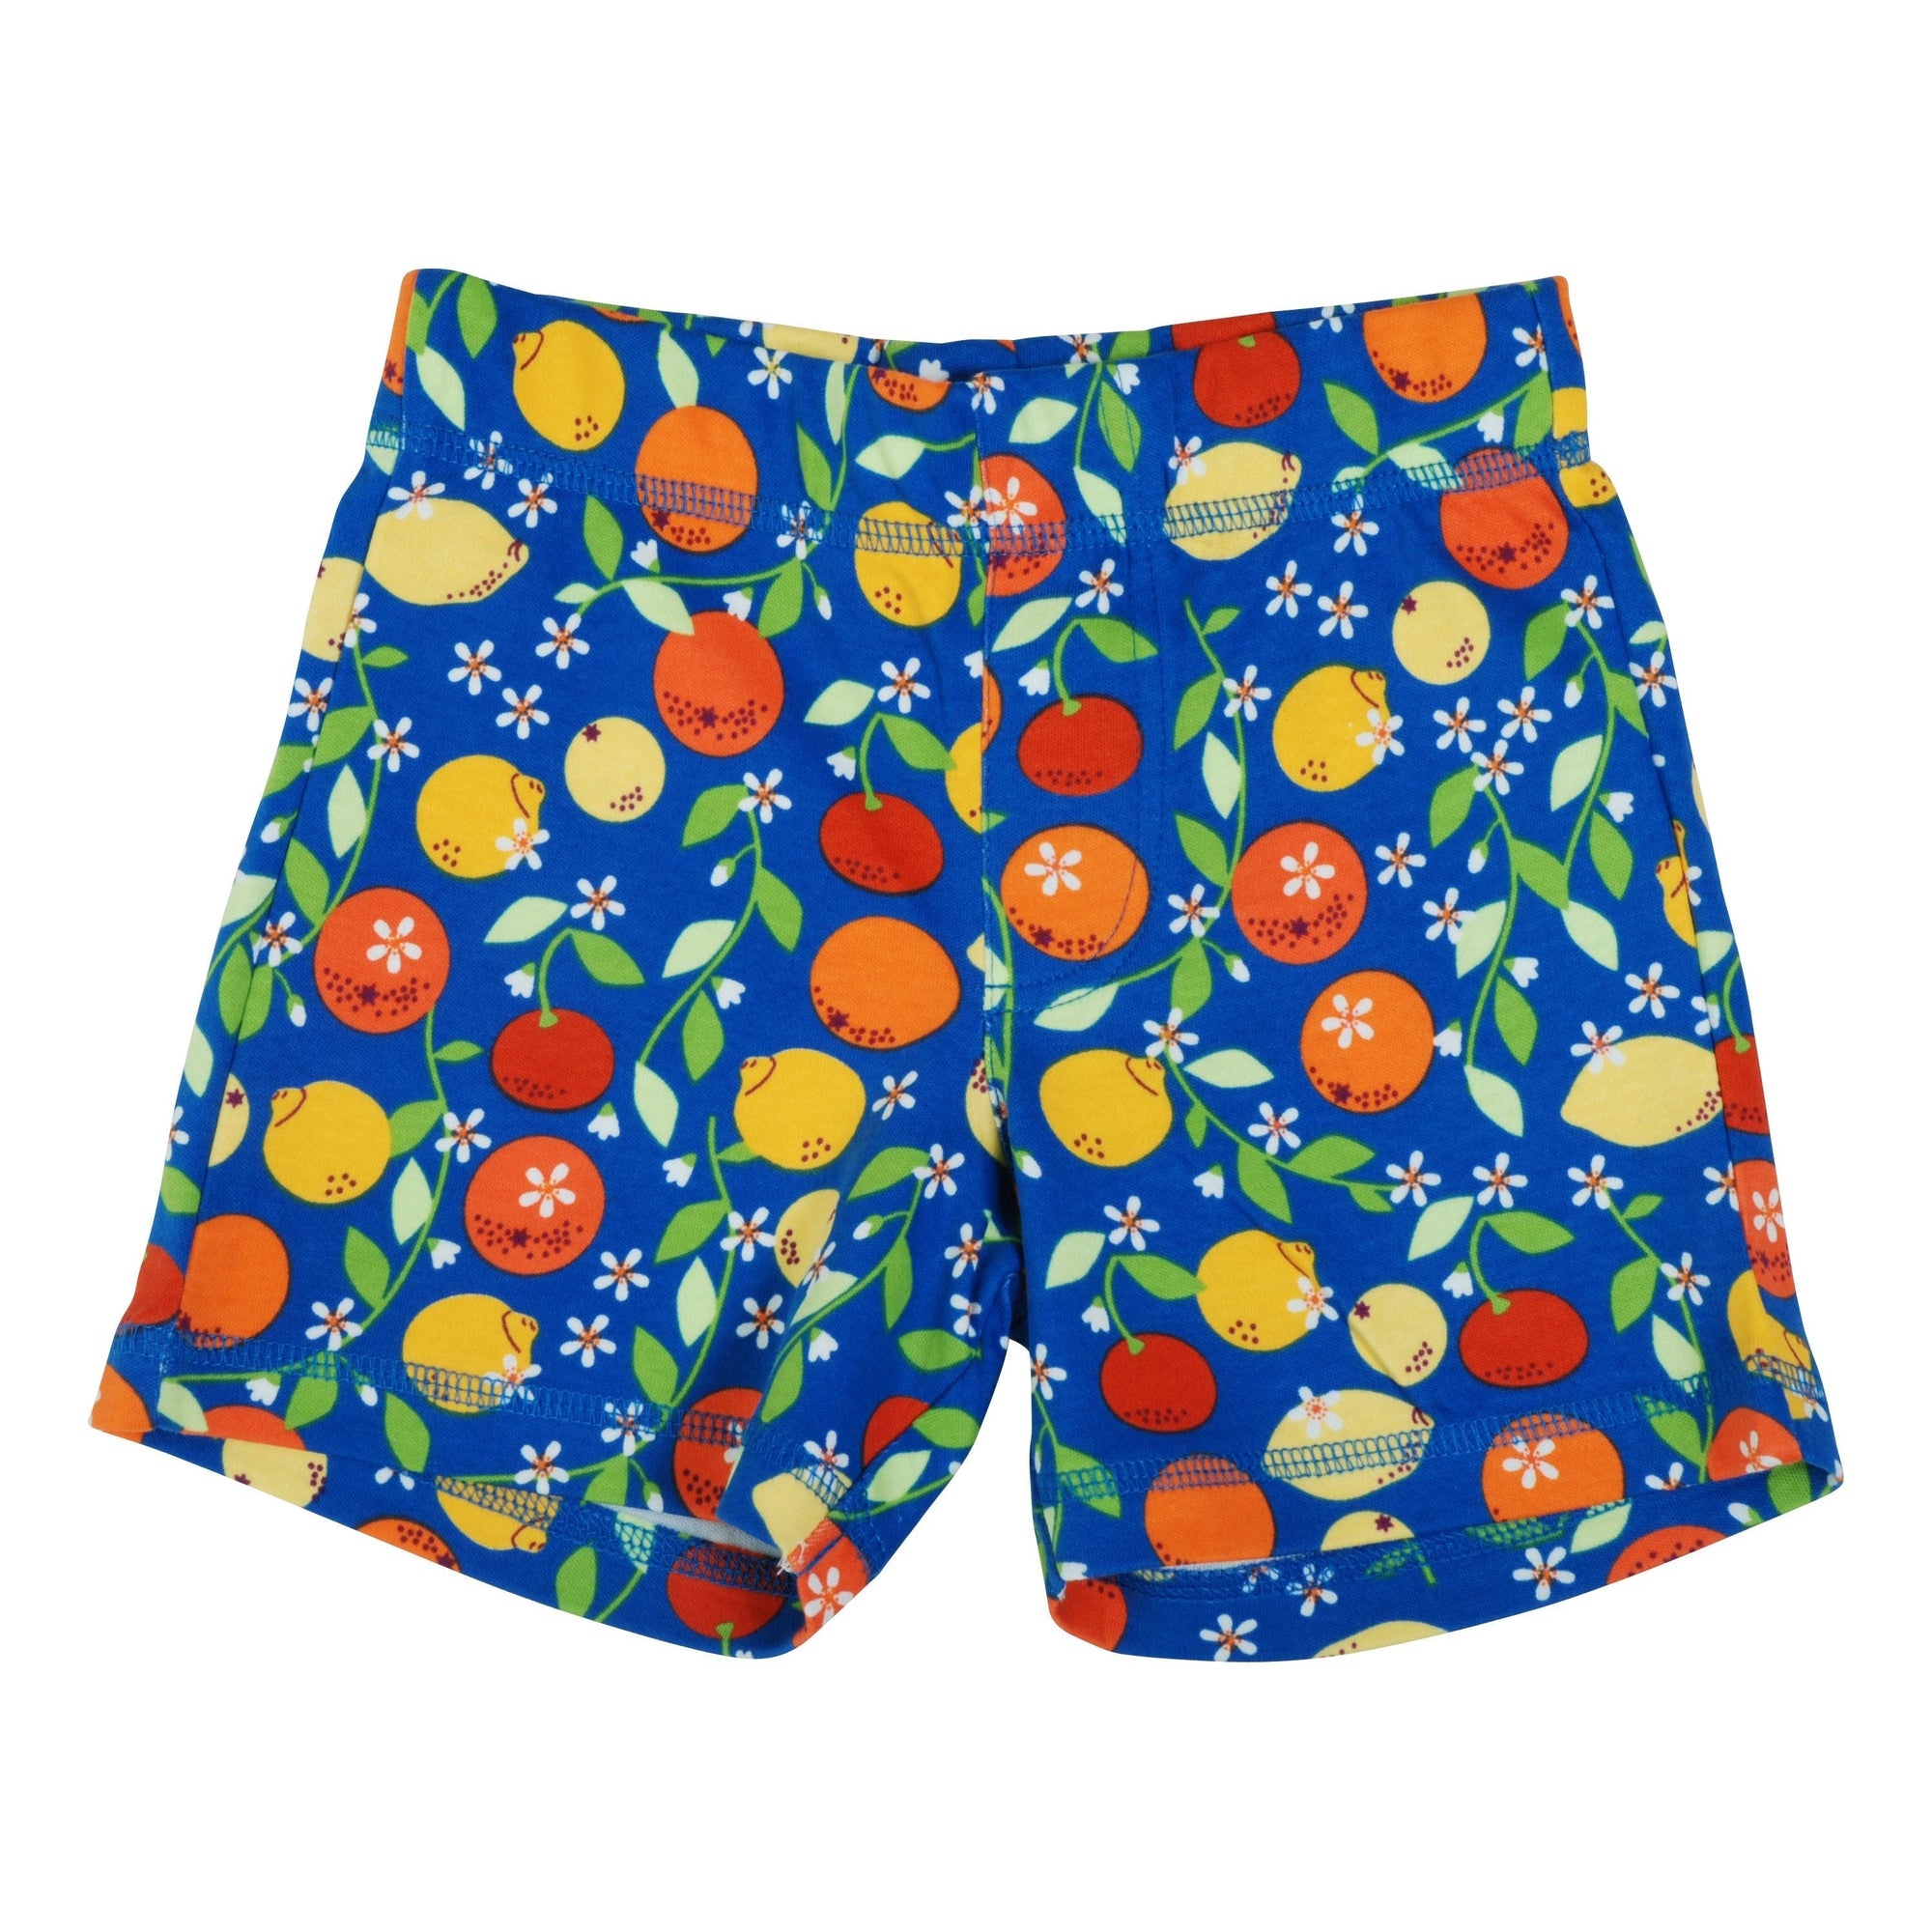 Citrus - Blue Shorts - 2 Left Size 6-12 months & 12-14 years-Duns Sweden-Modern Rascals